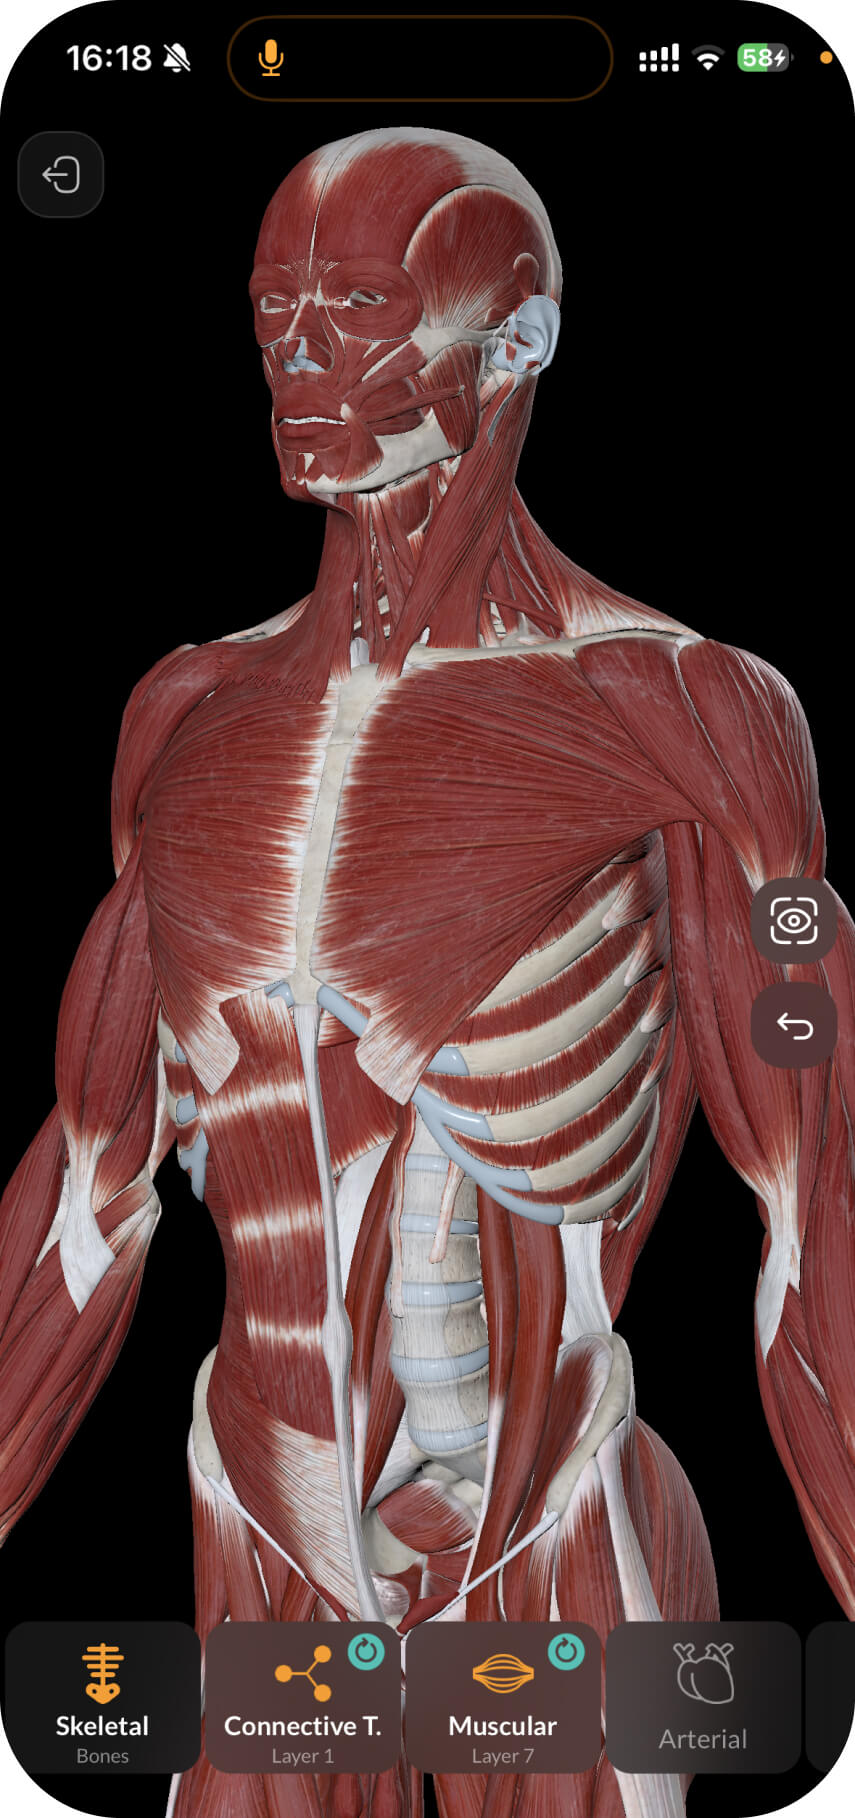 Main screen of the Easy Anatomy 3D app